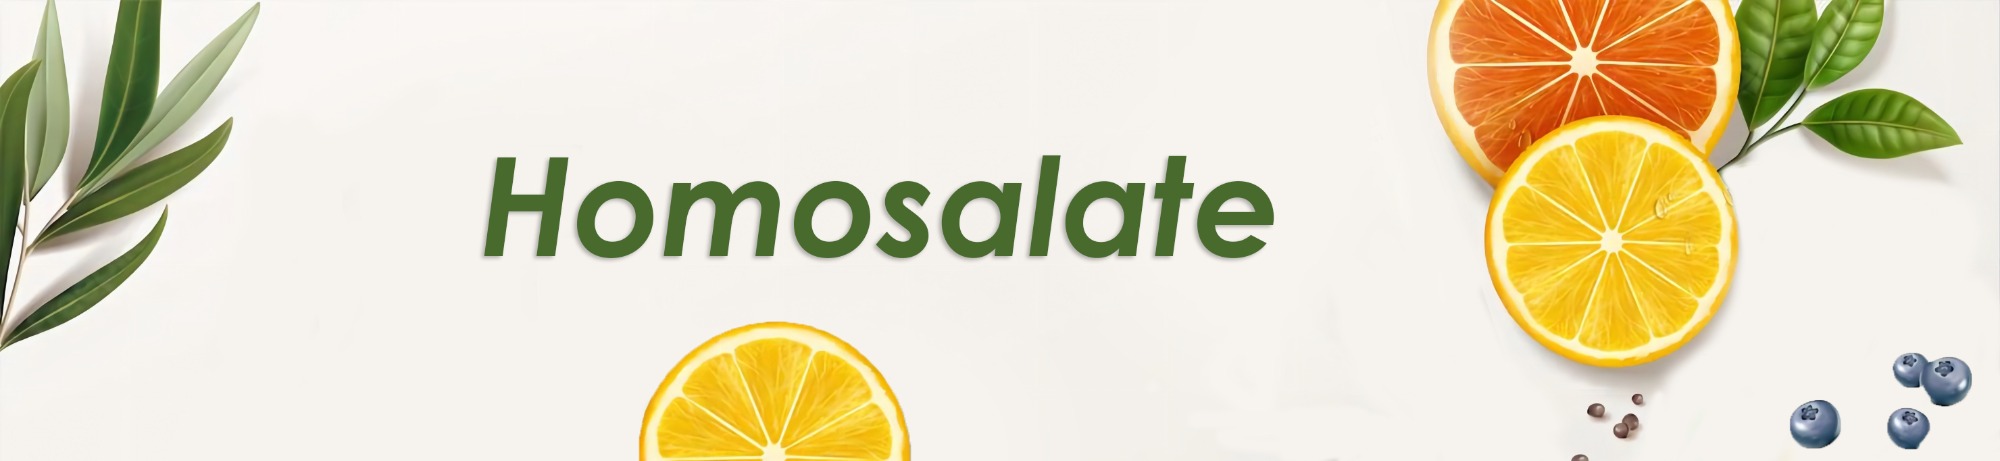 Homosalate Supplier - Greenway